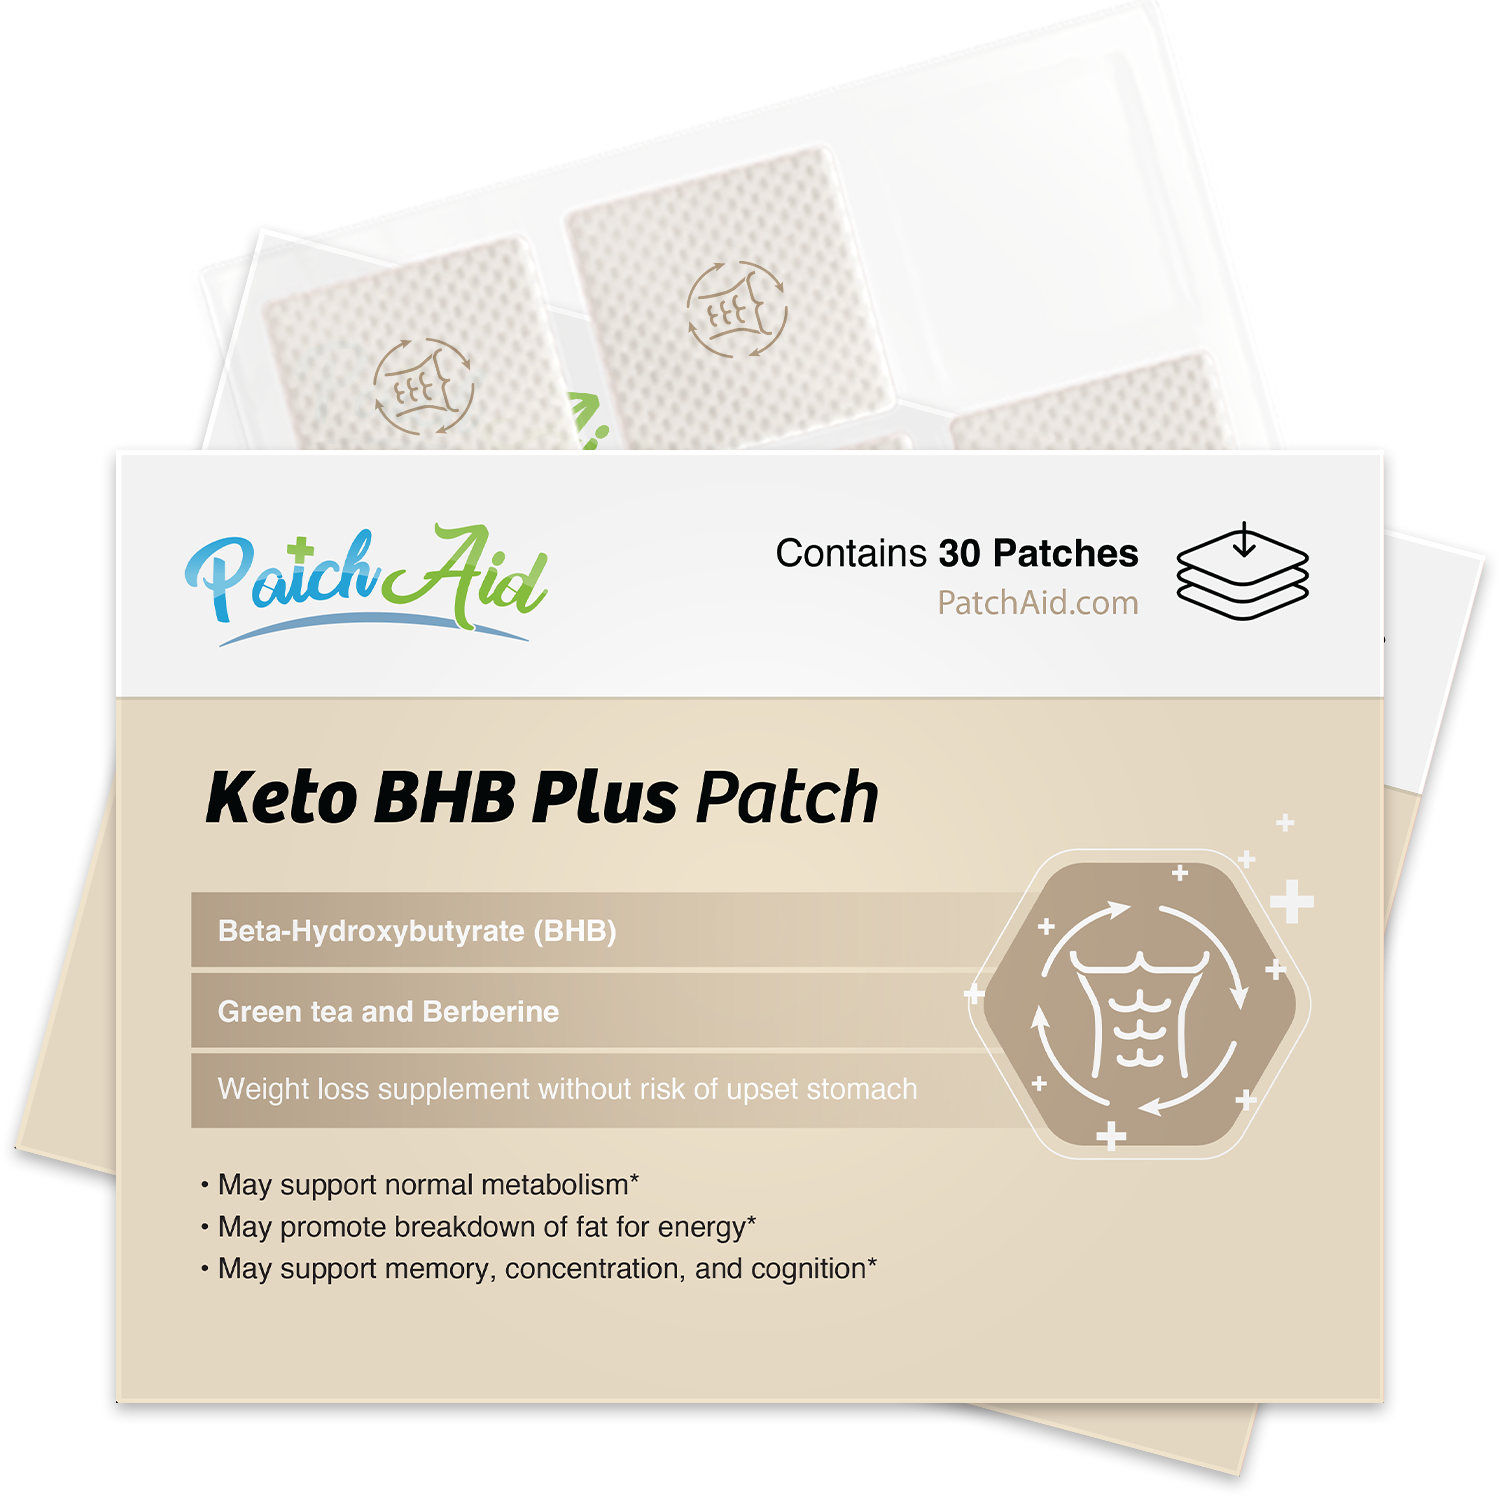 Keto BHB Plus Patch by PatchAid